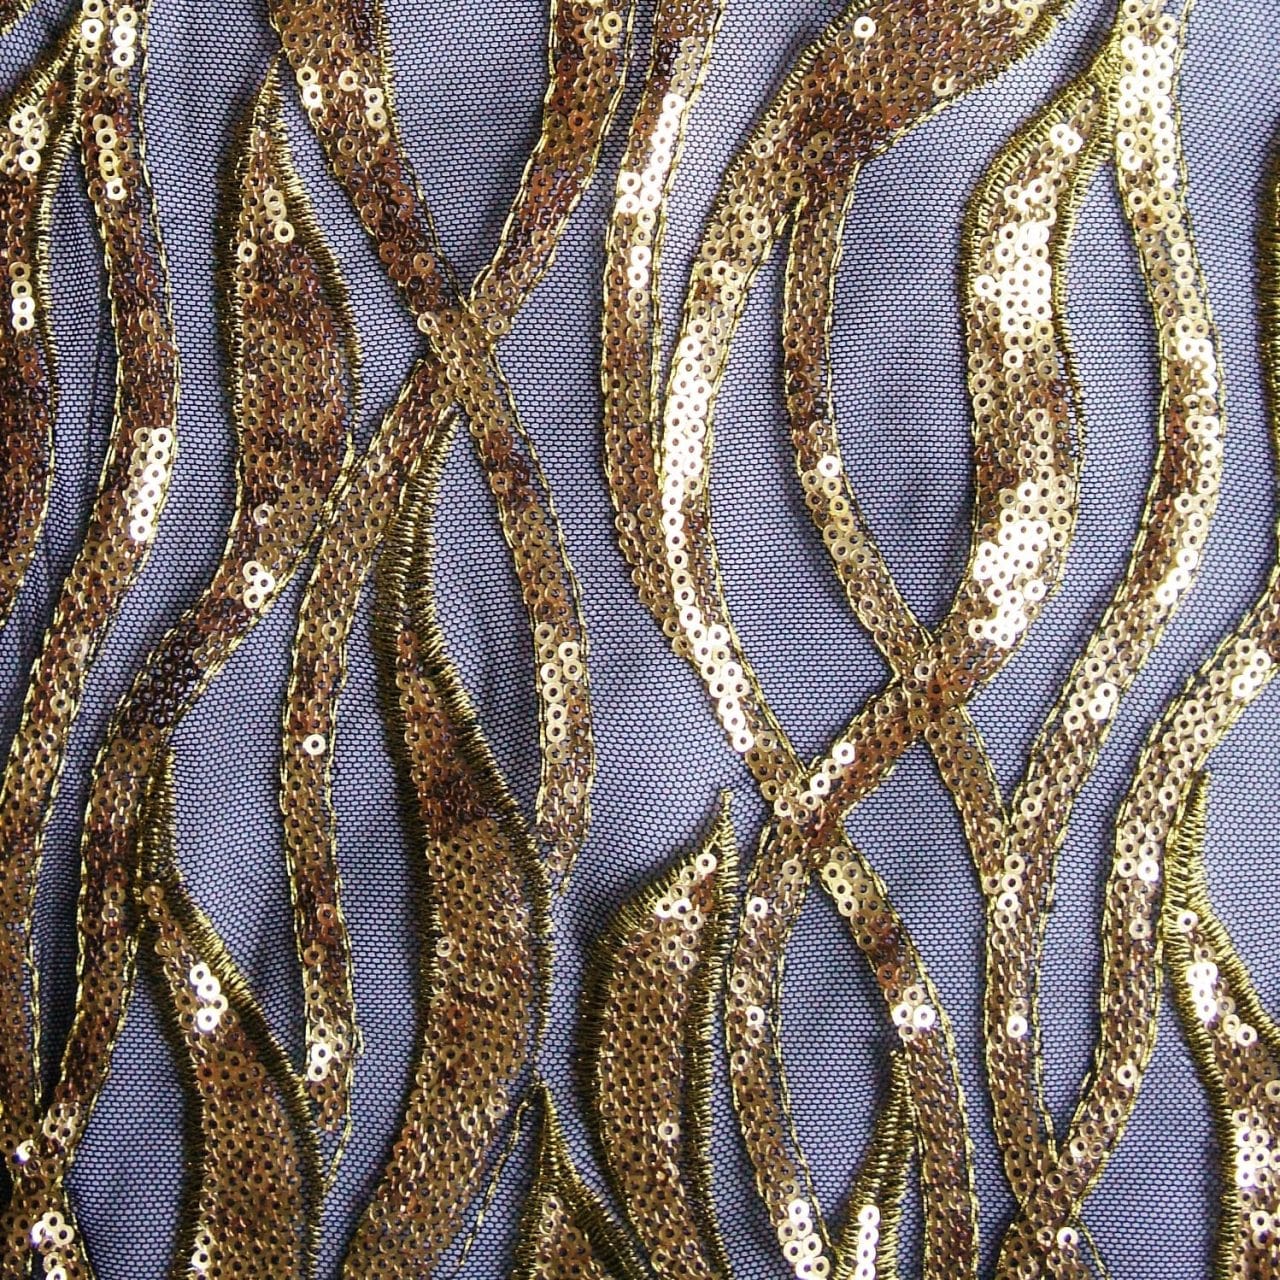 Gold on Black Mini Sequin Fabric